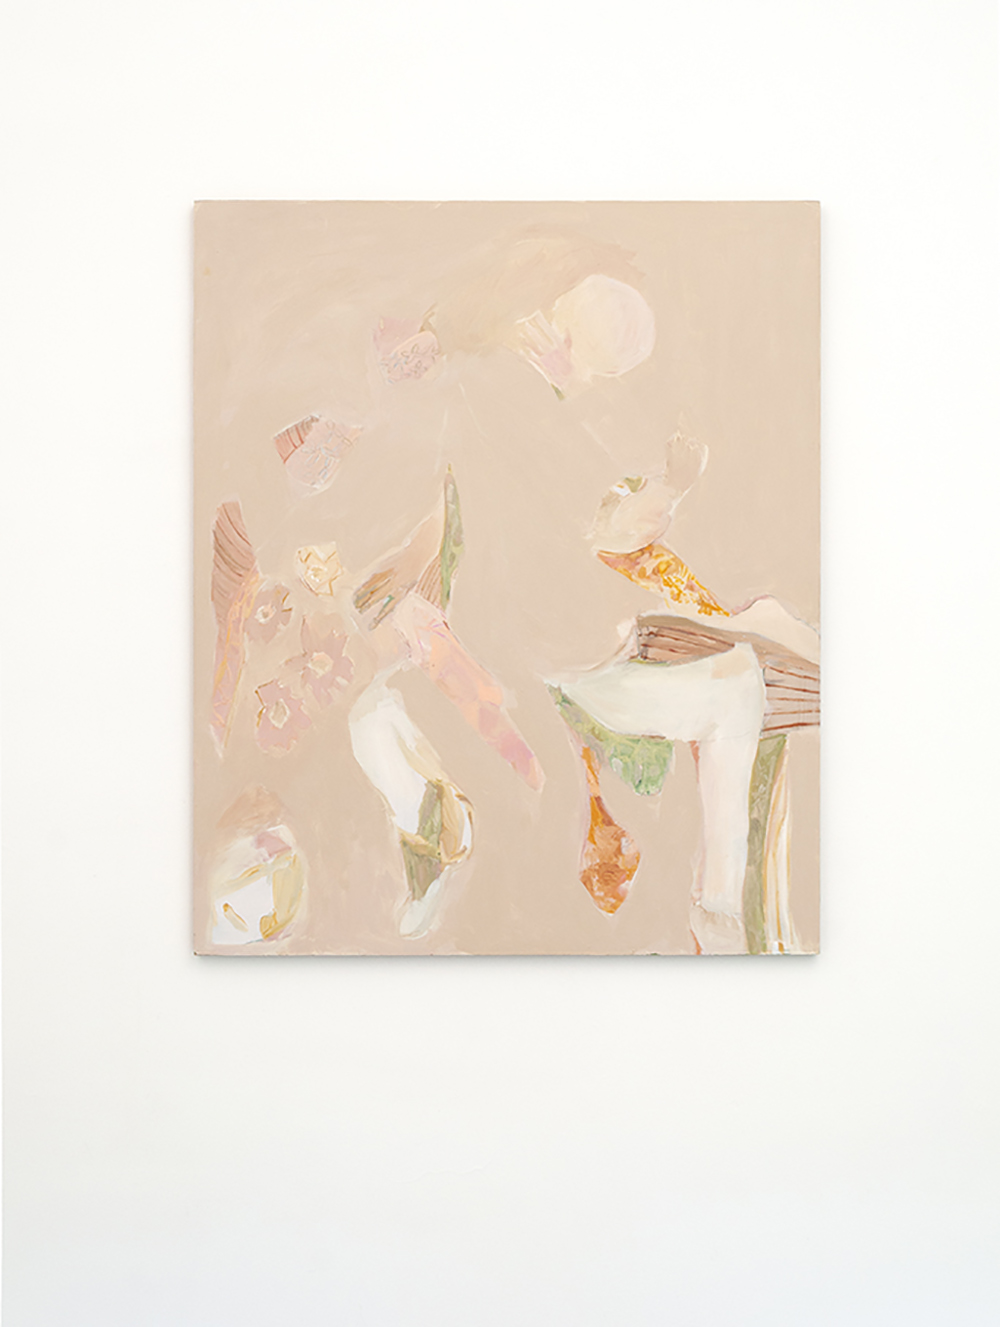 Beatrice Meoni, Last spring painting, 2021, olio su tavola, cm 120x100